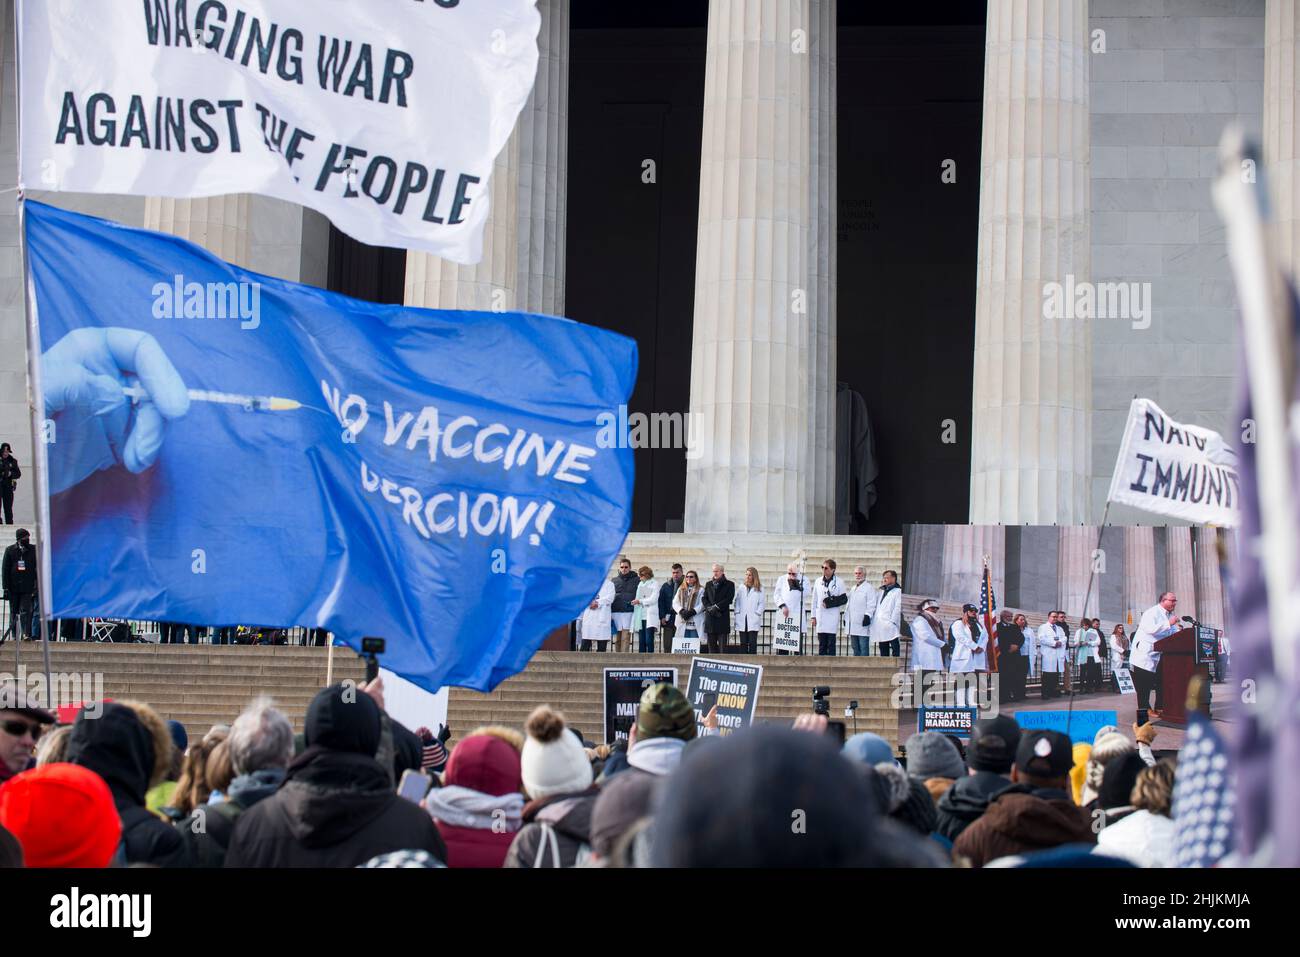 Defeat the Mandates march at Lincoln Memorial reflecting pool.Demonstrators protesting mask & Covid-19 vaccination mandates.Washington, DC,Jan 23,2022 Stock Photo